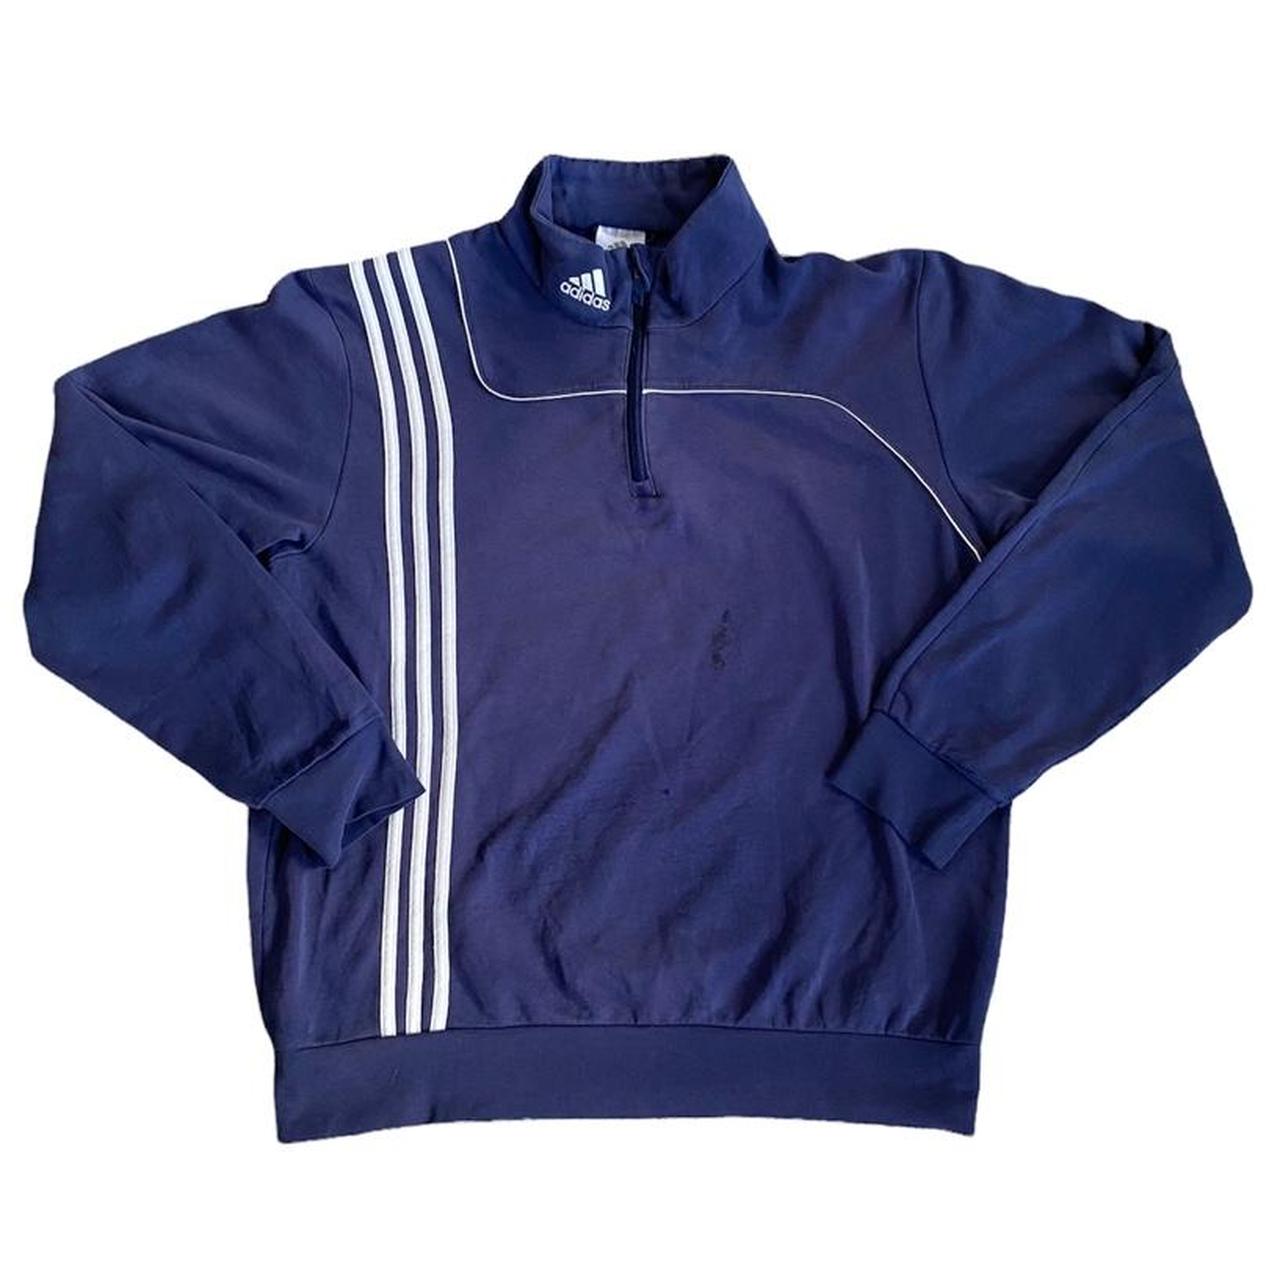 Vintage Adidas Navy Quarter Zip Sweatshirt Size on... - Depop